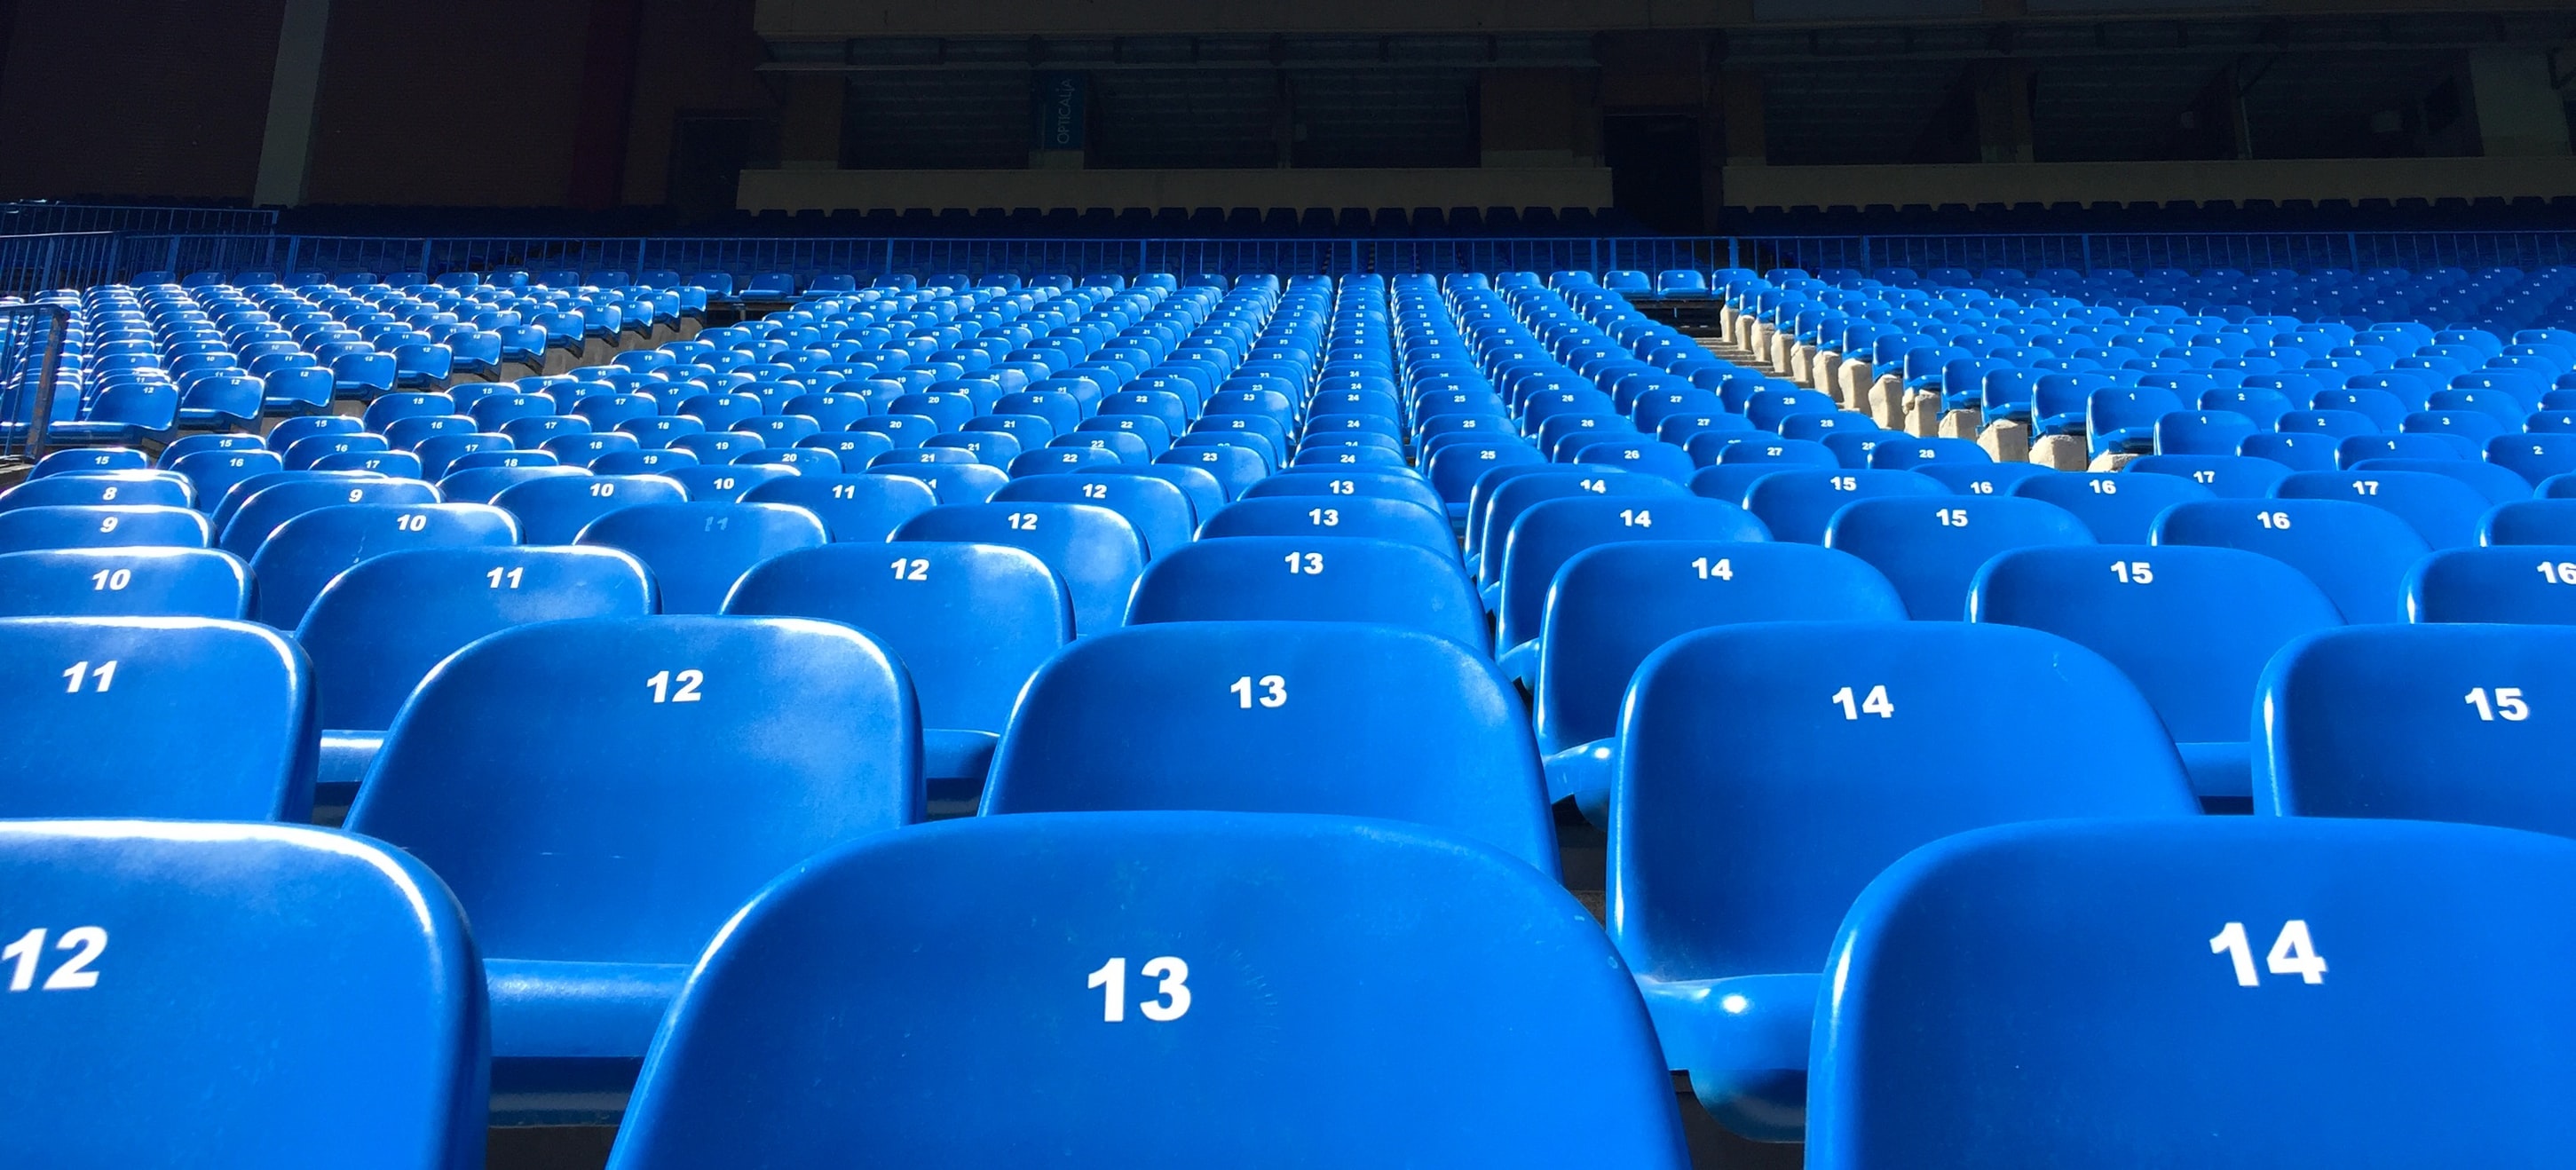 Soccer-Stadium-Seats